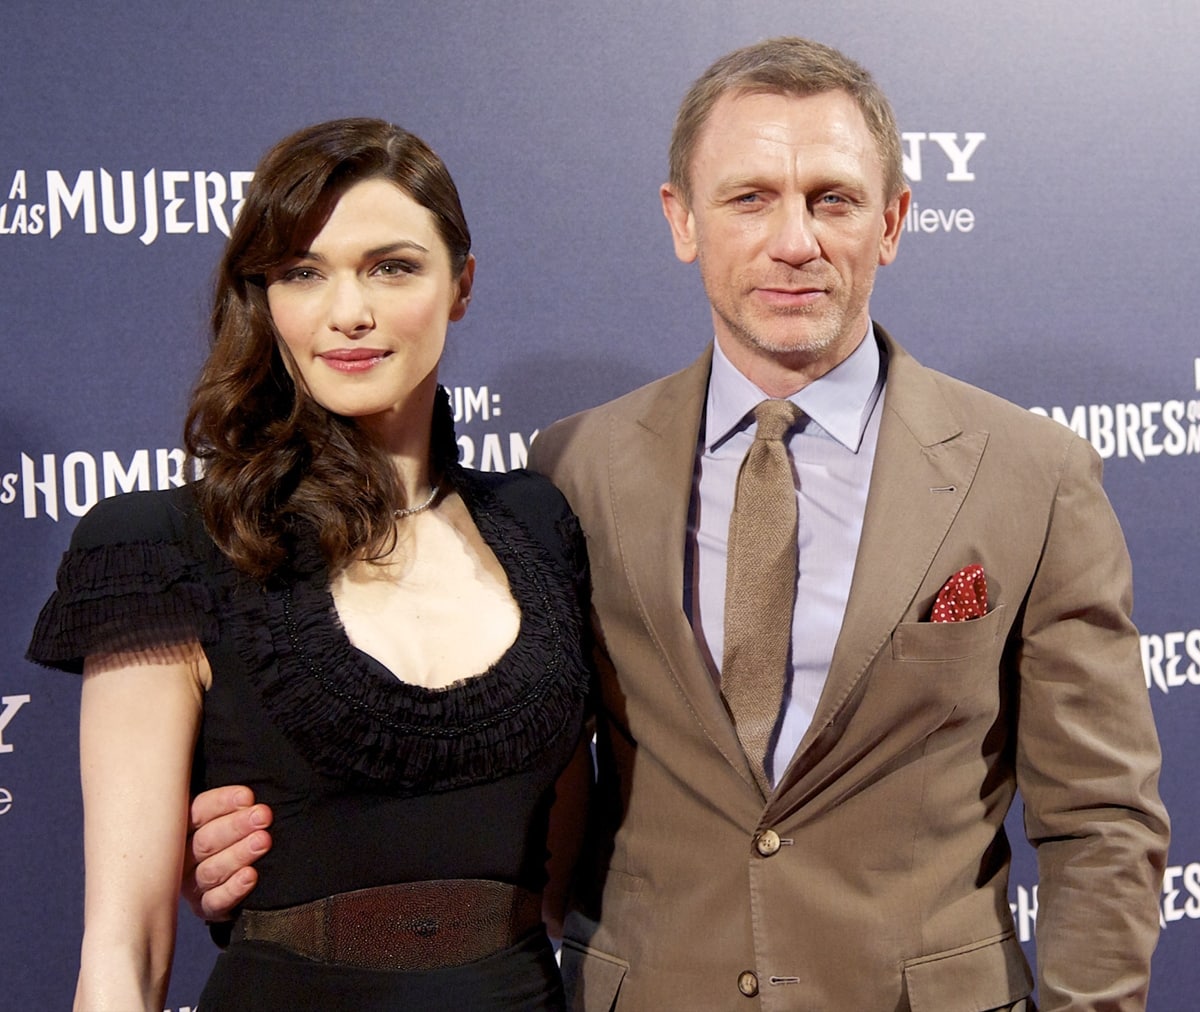 Rachel Weisz and Daniel Craig secretly tied the knot in New York in 2011